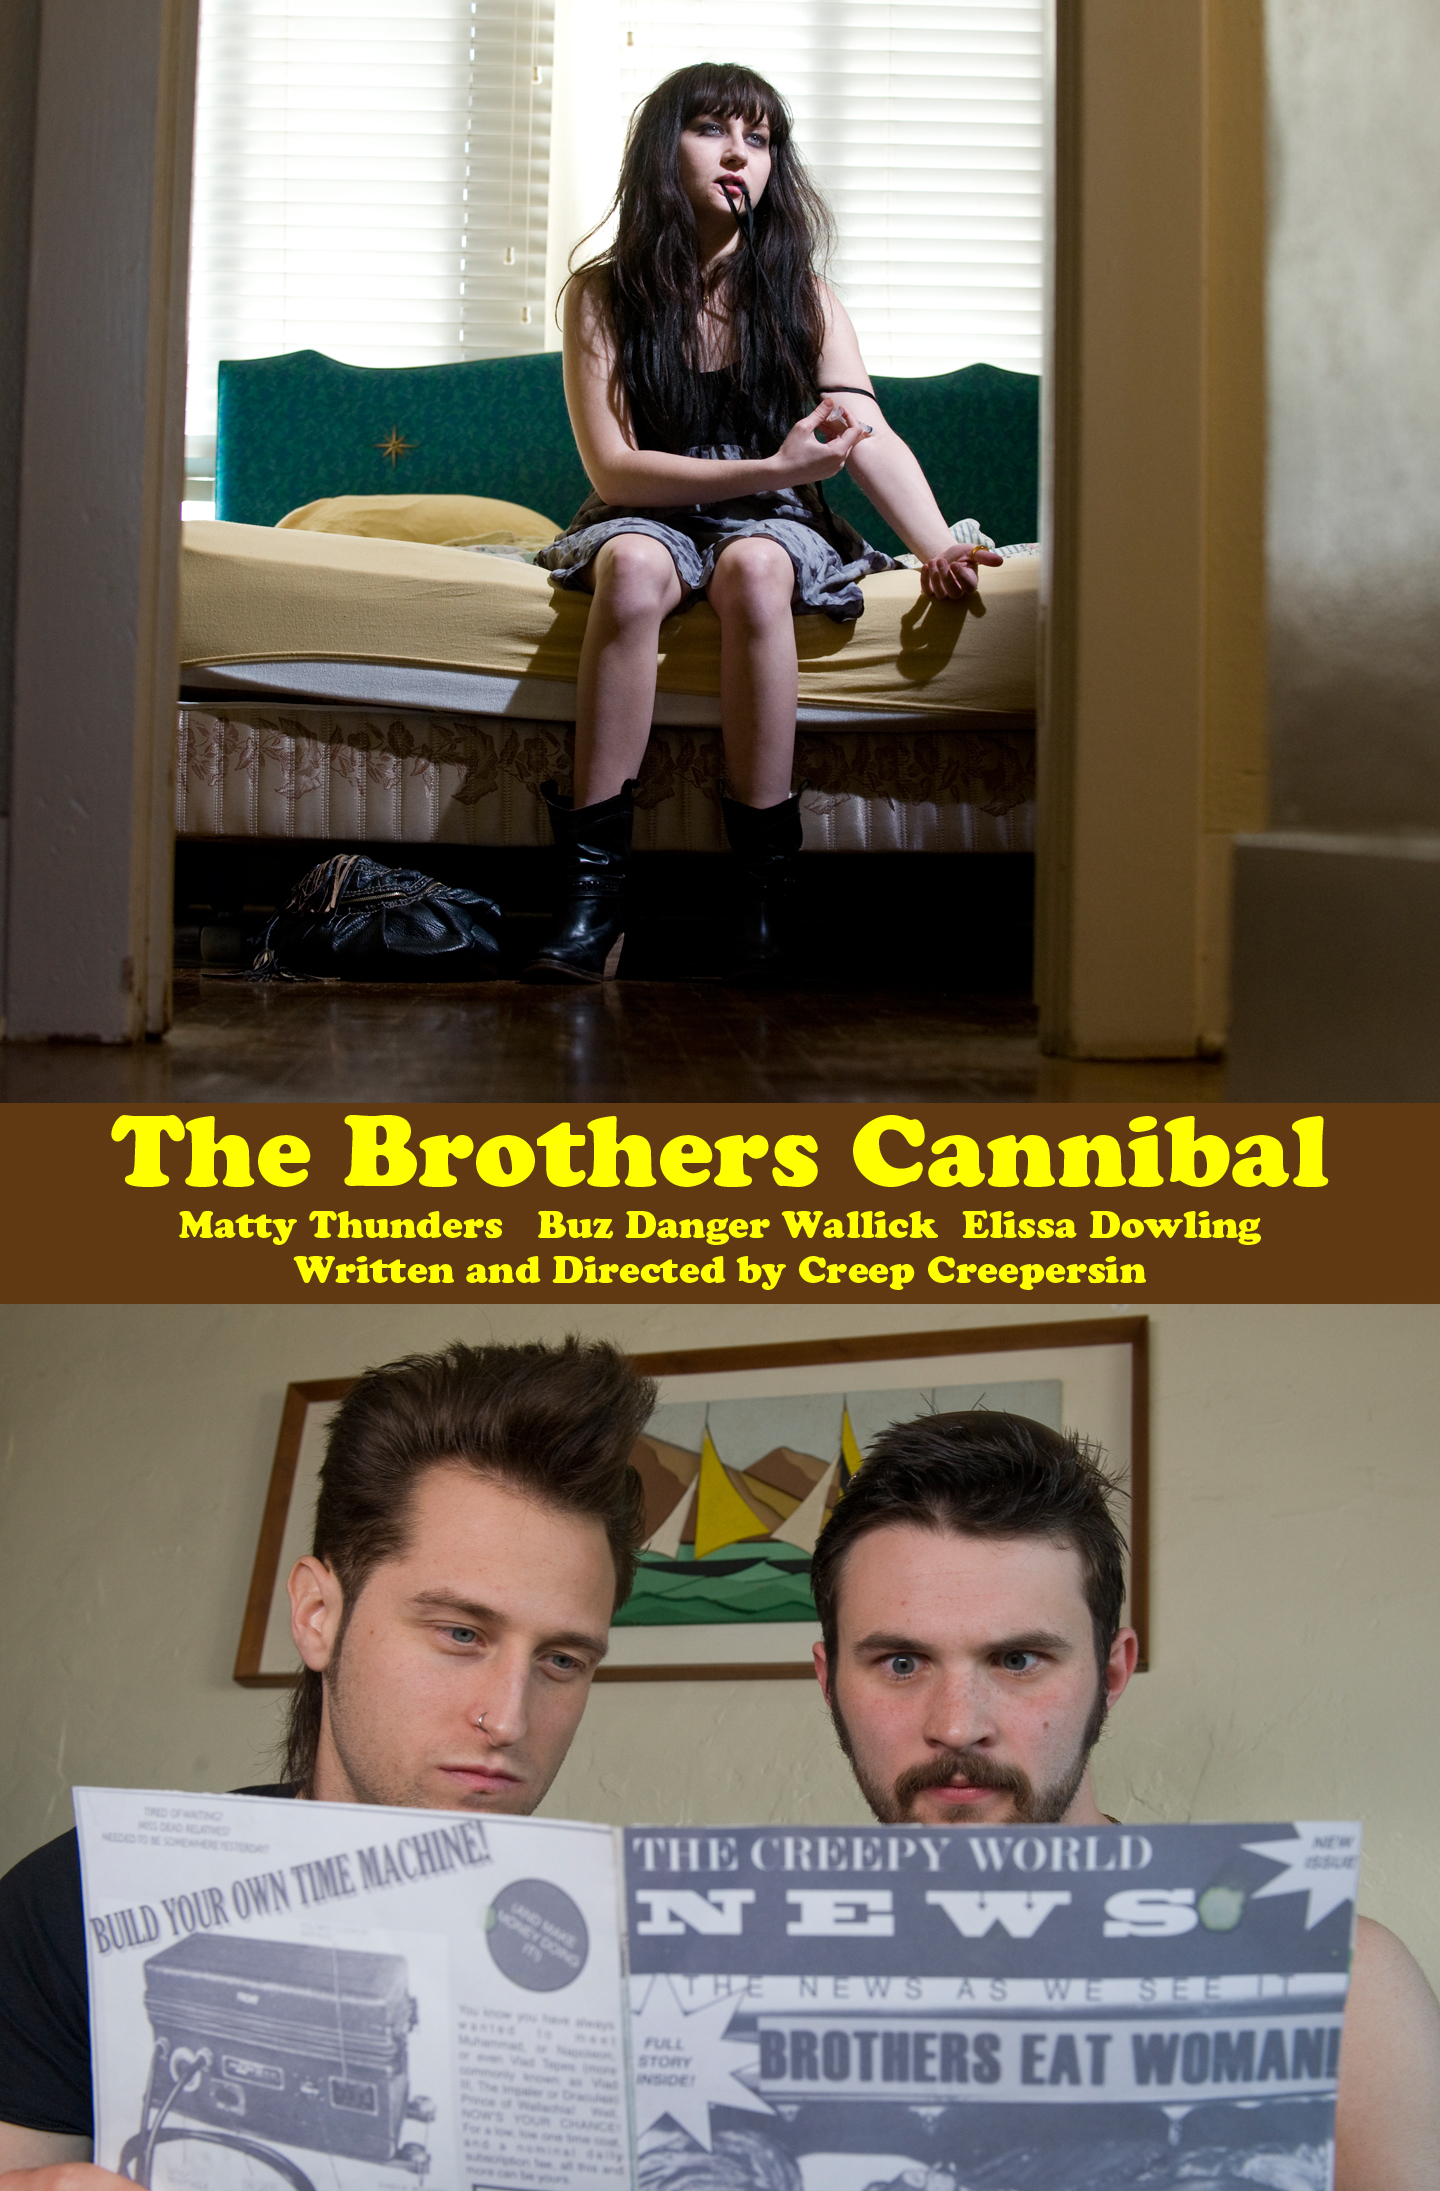 Братья каннибалы (2012)